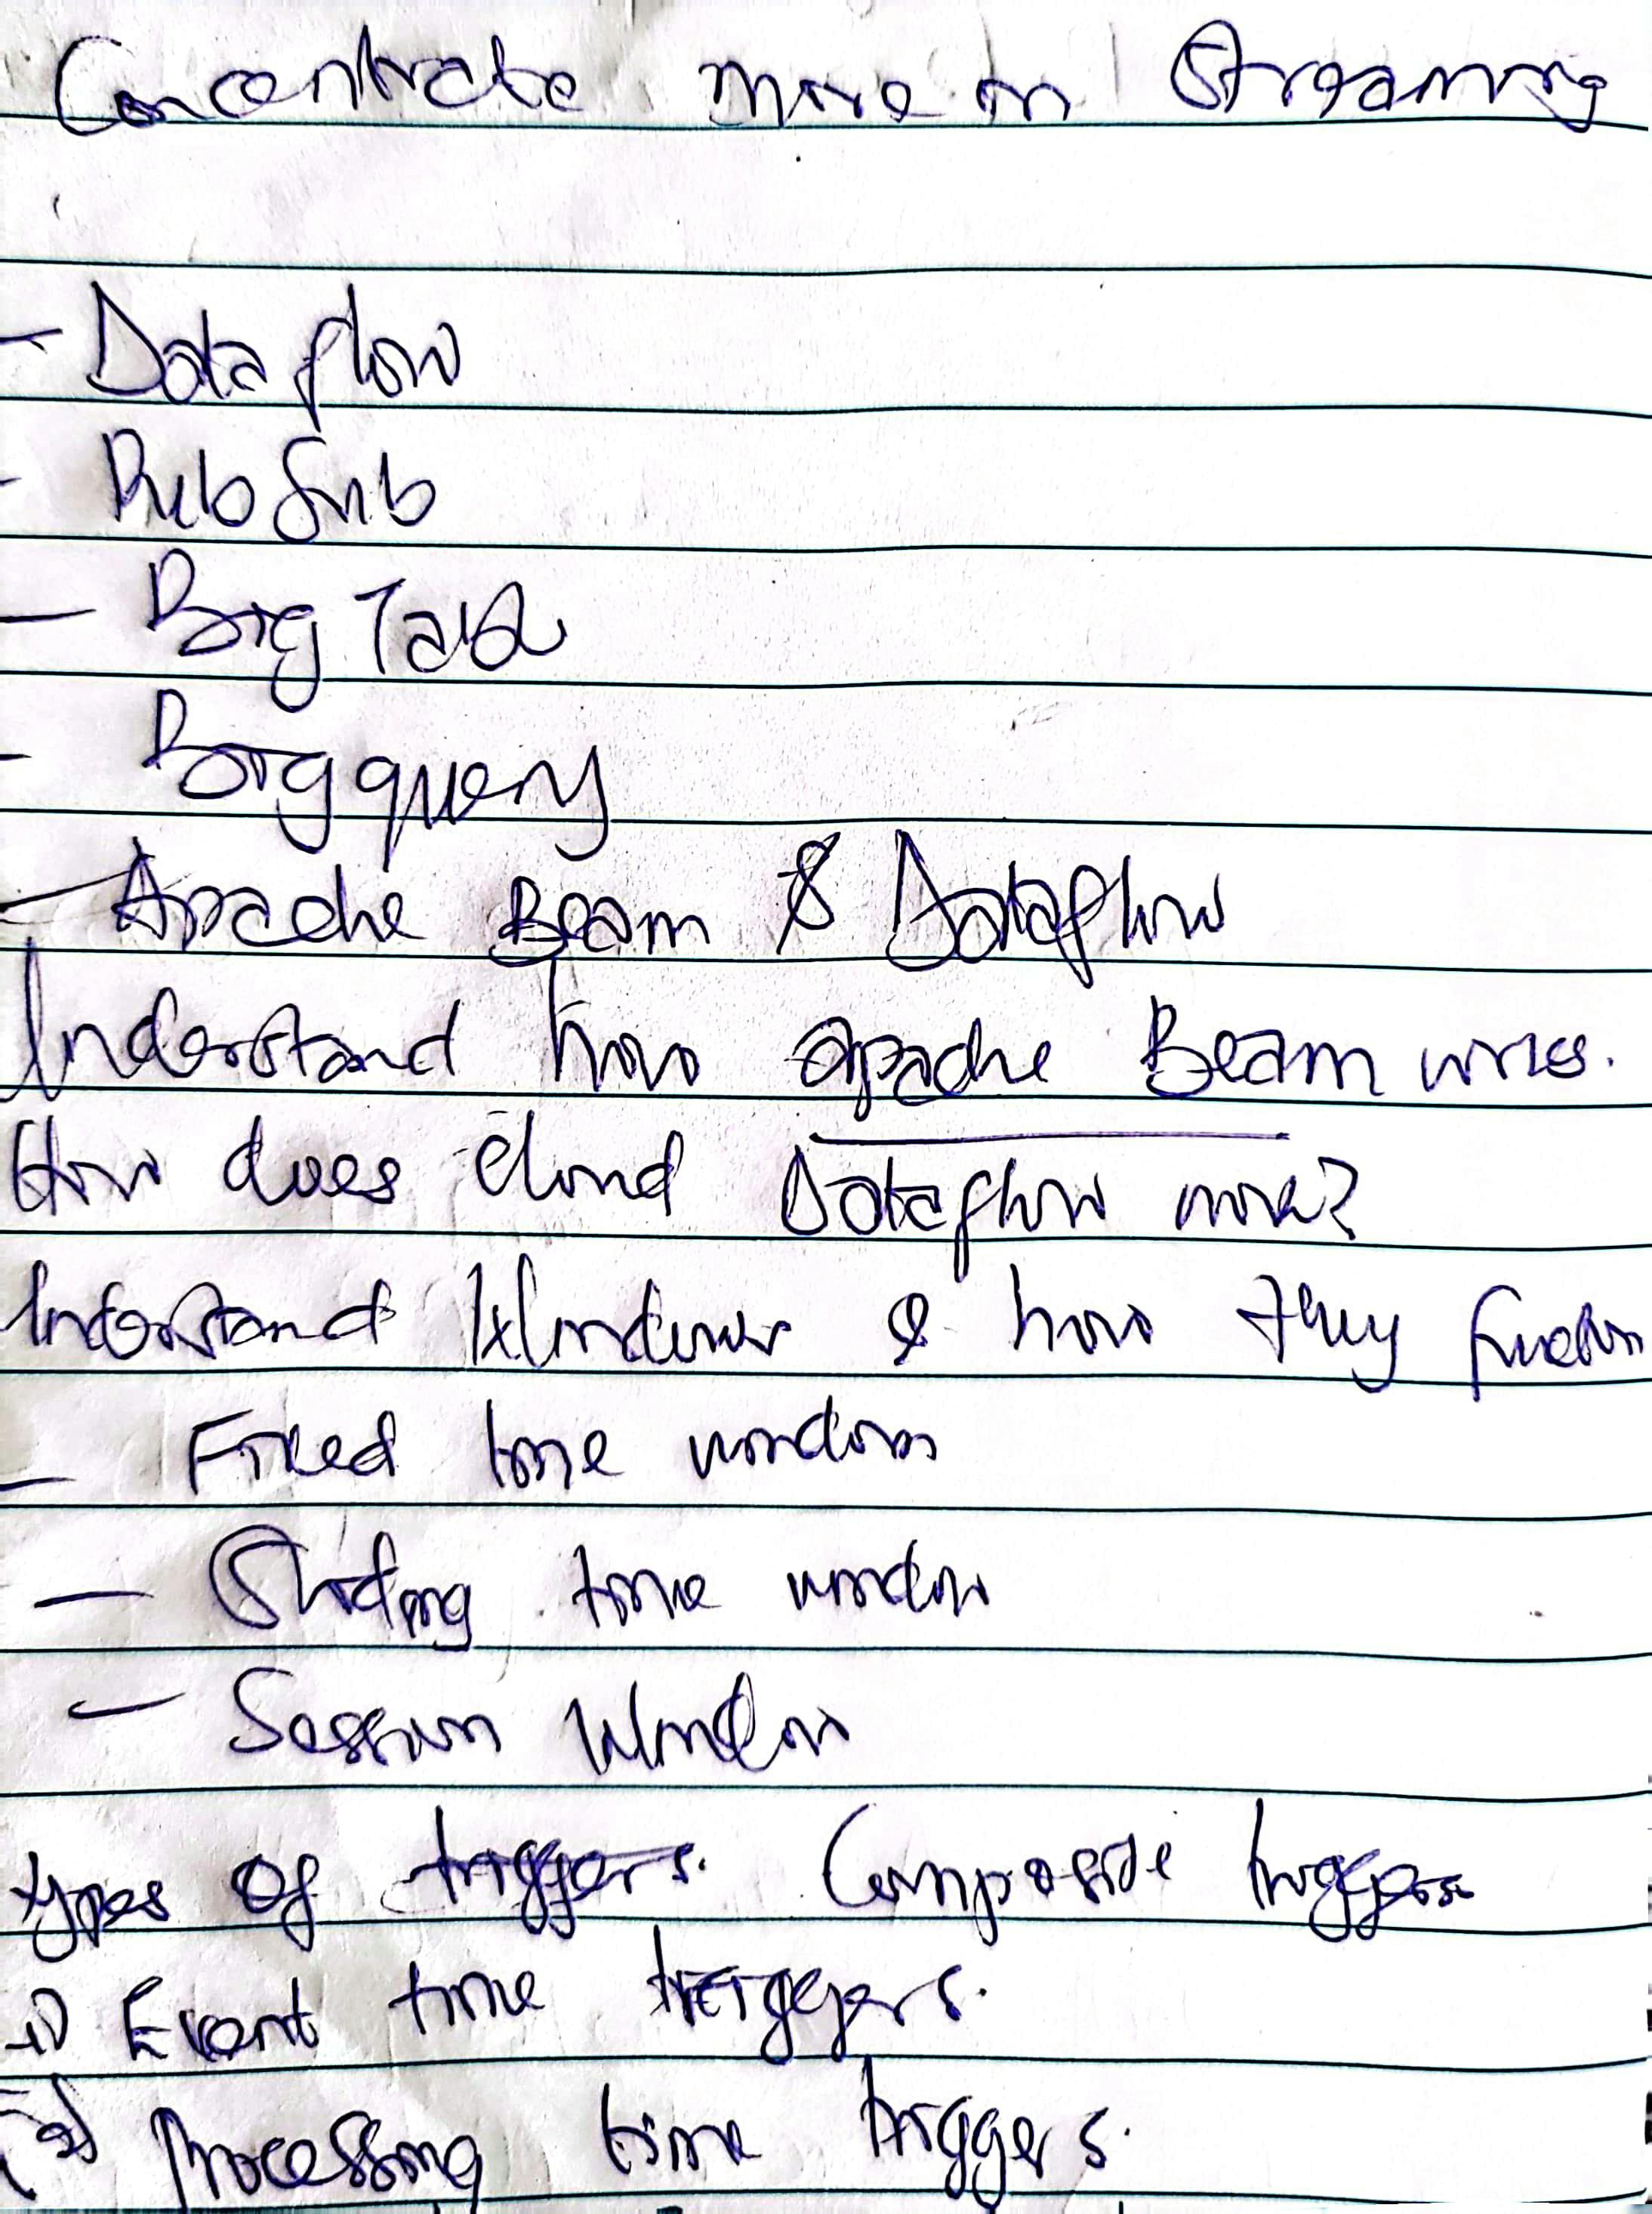 Bidemi's handwritten note in preparation of the GCP PDE exam.